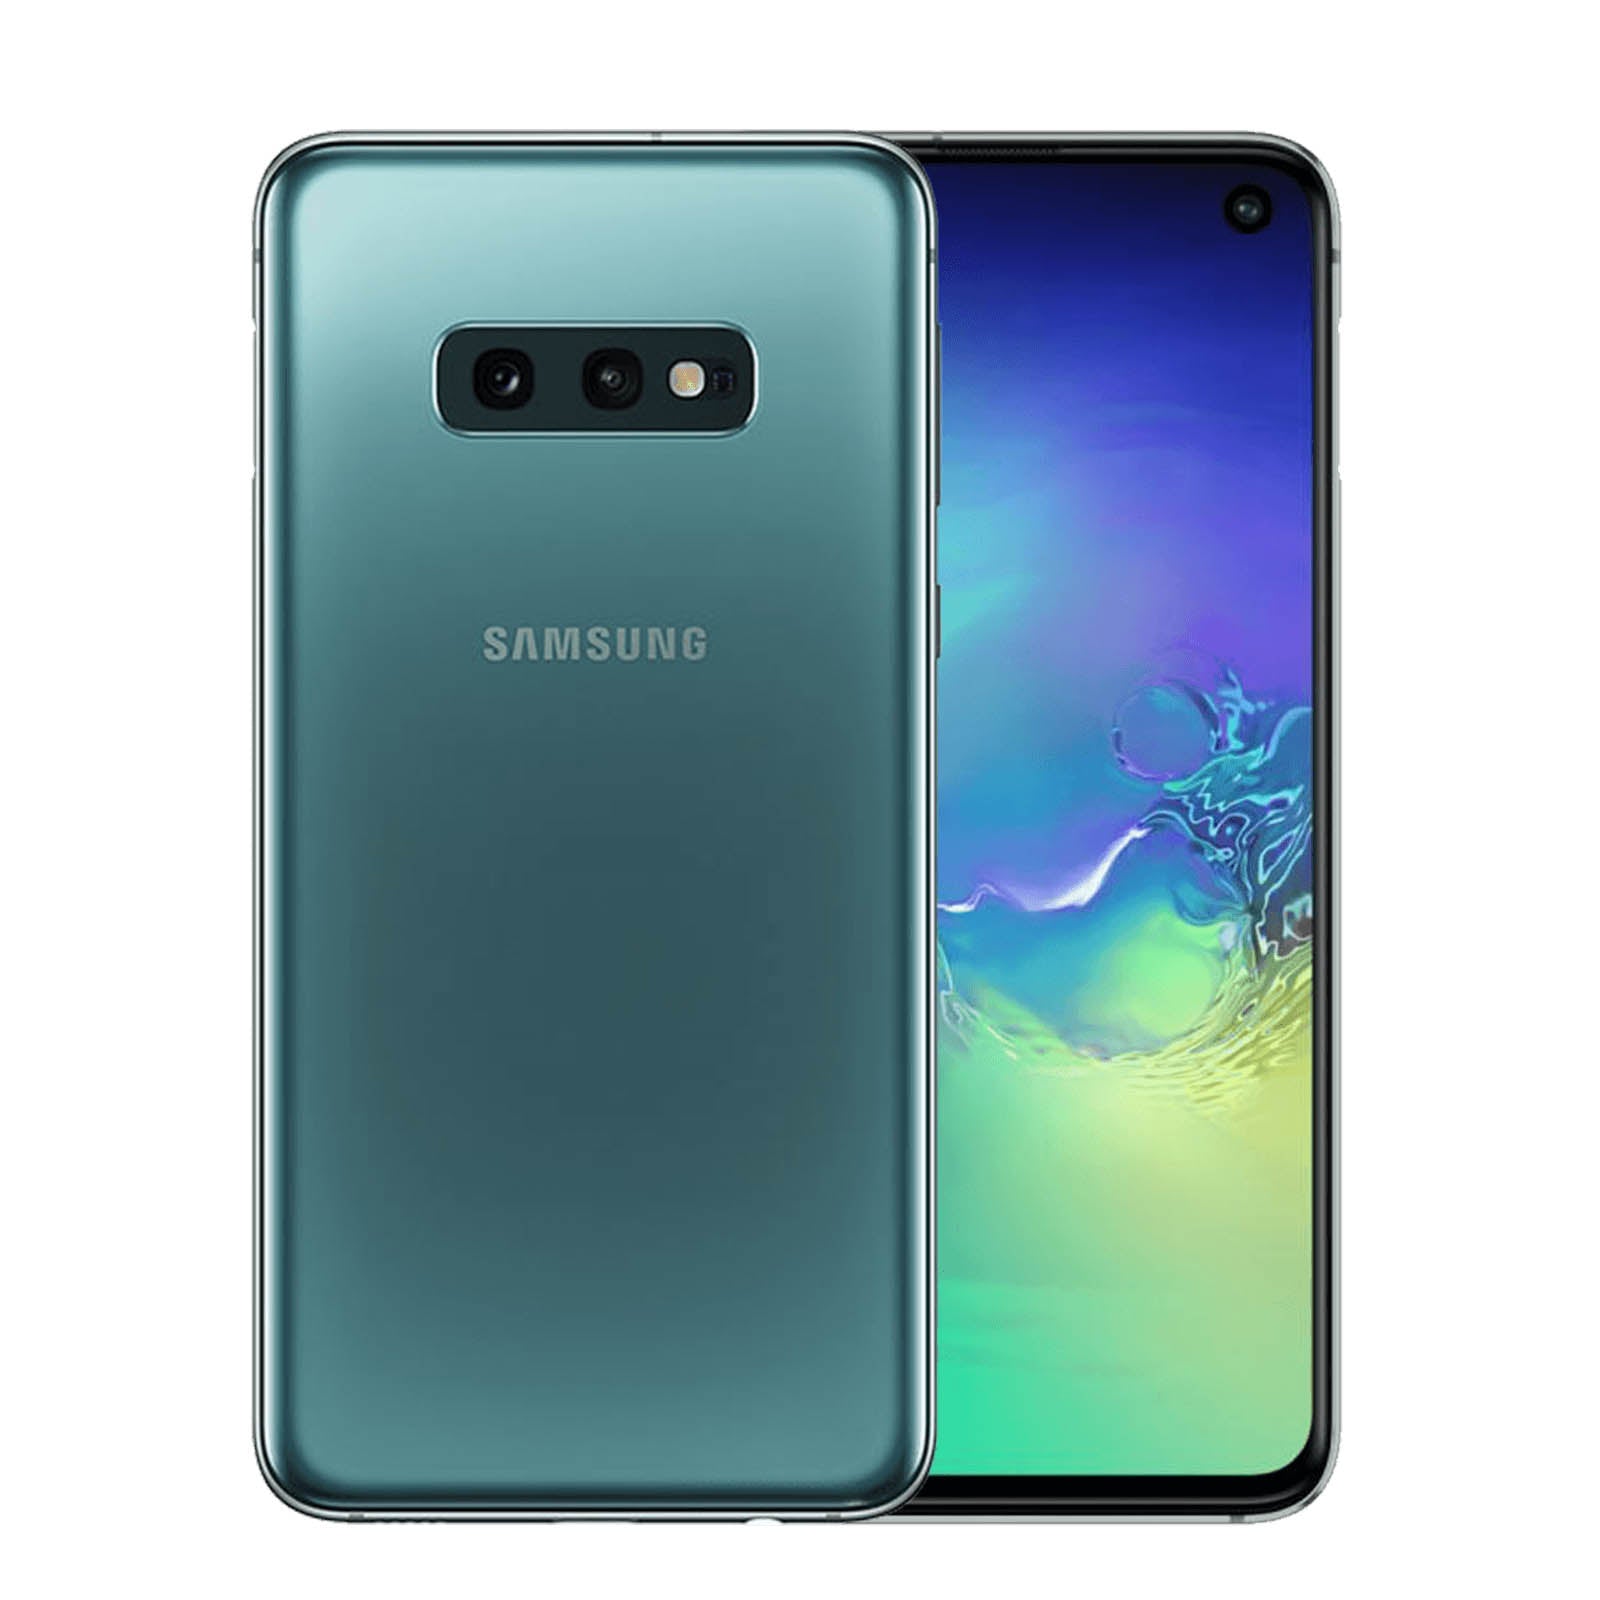 Samsung Galaxy S10E 256GB Prism Green Very good - Unlocked